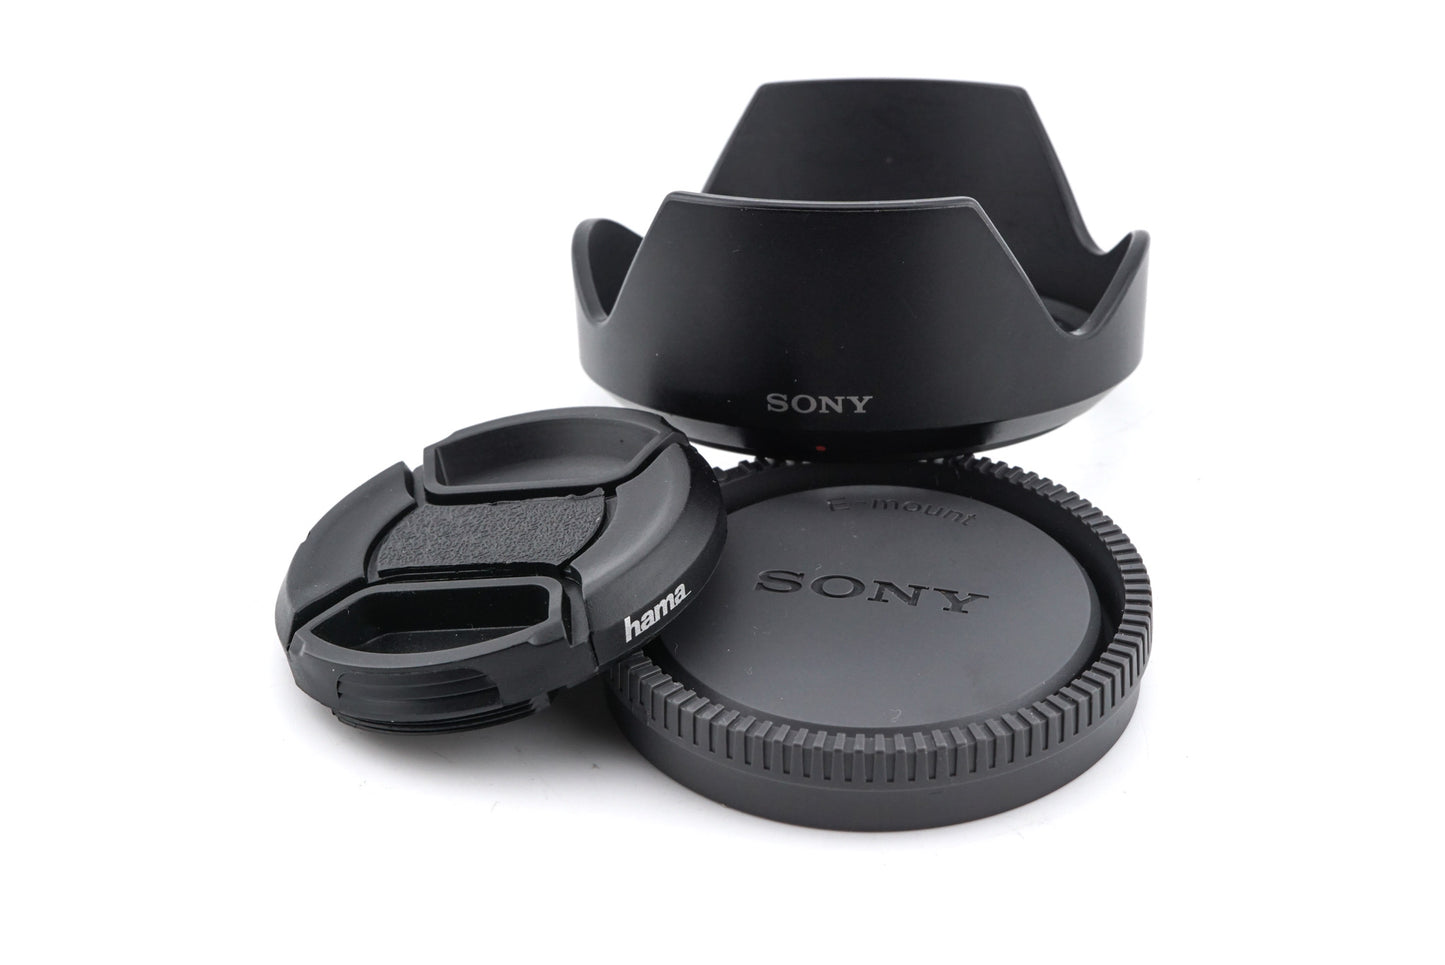 Sony 18-55mm f3.5-5.6 OSS